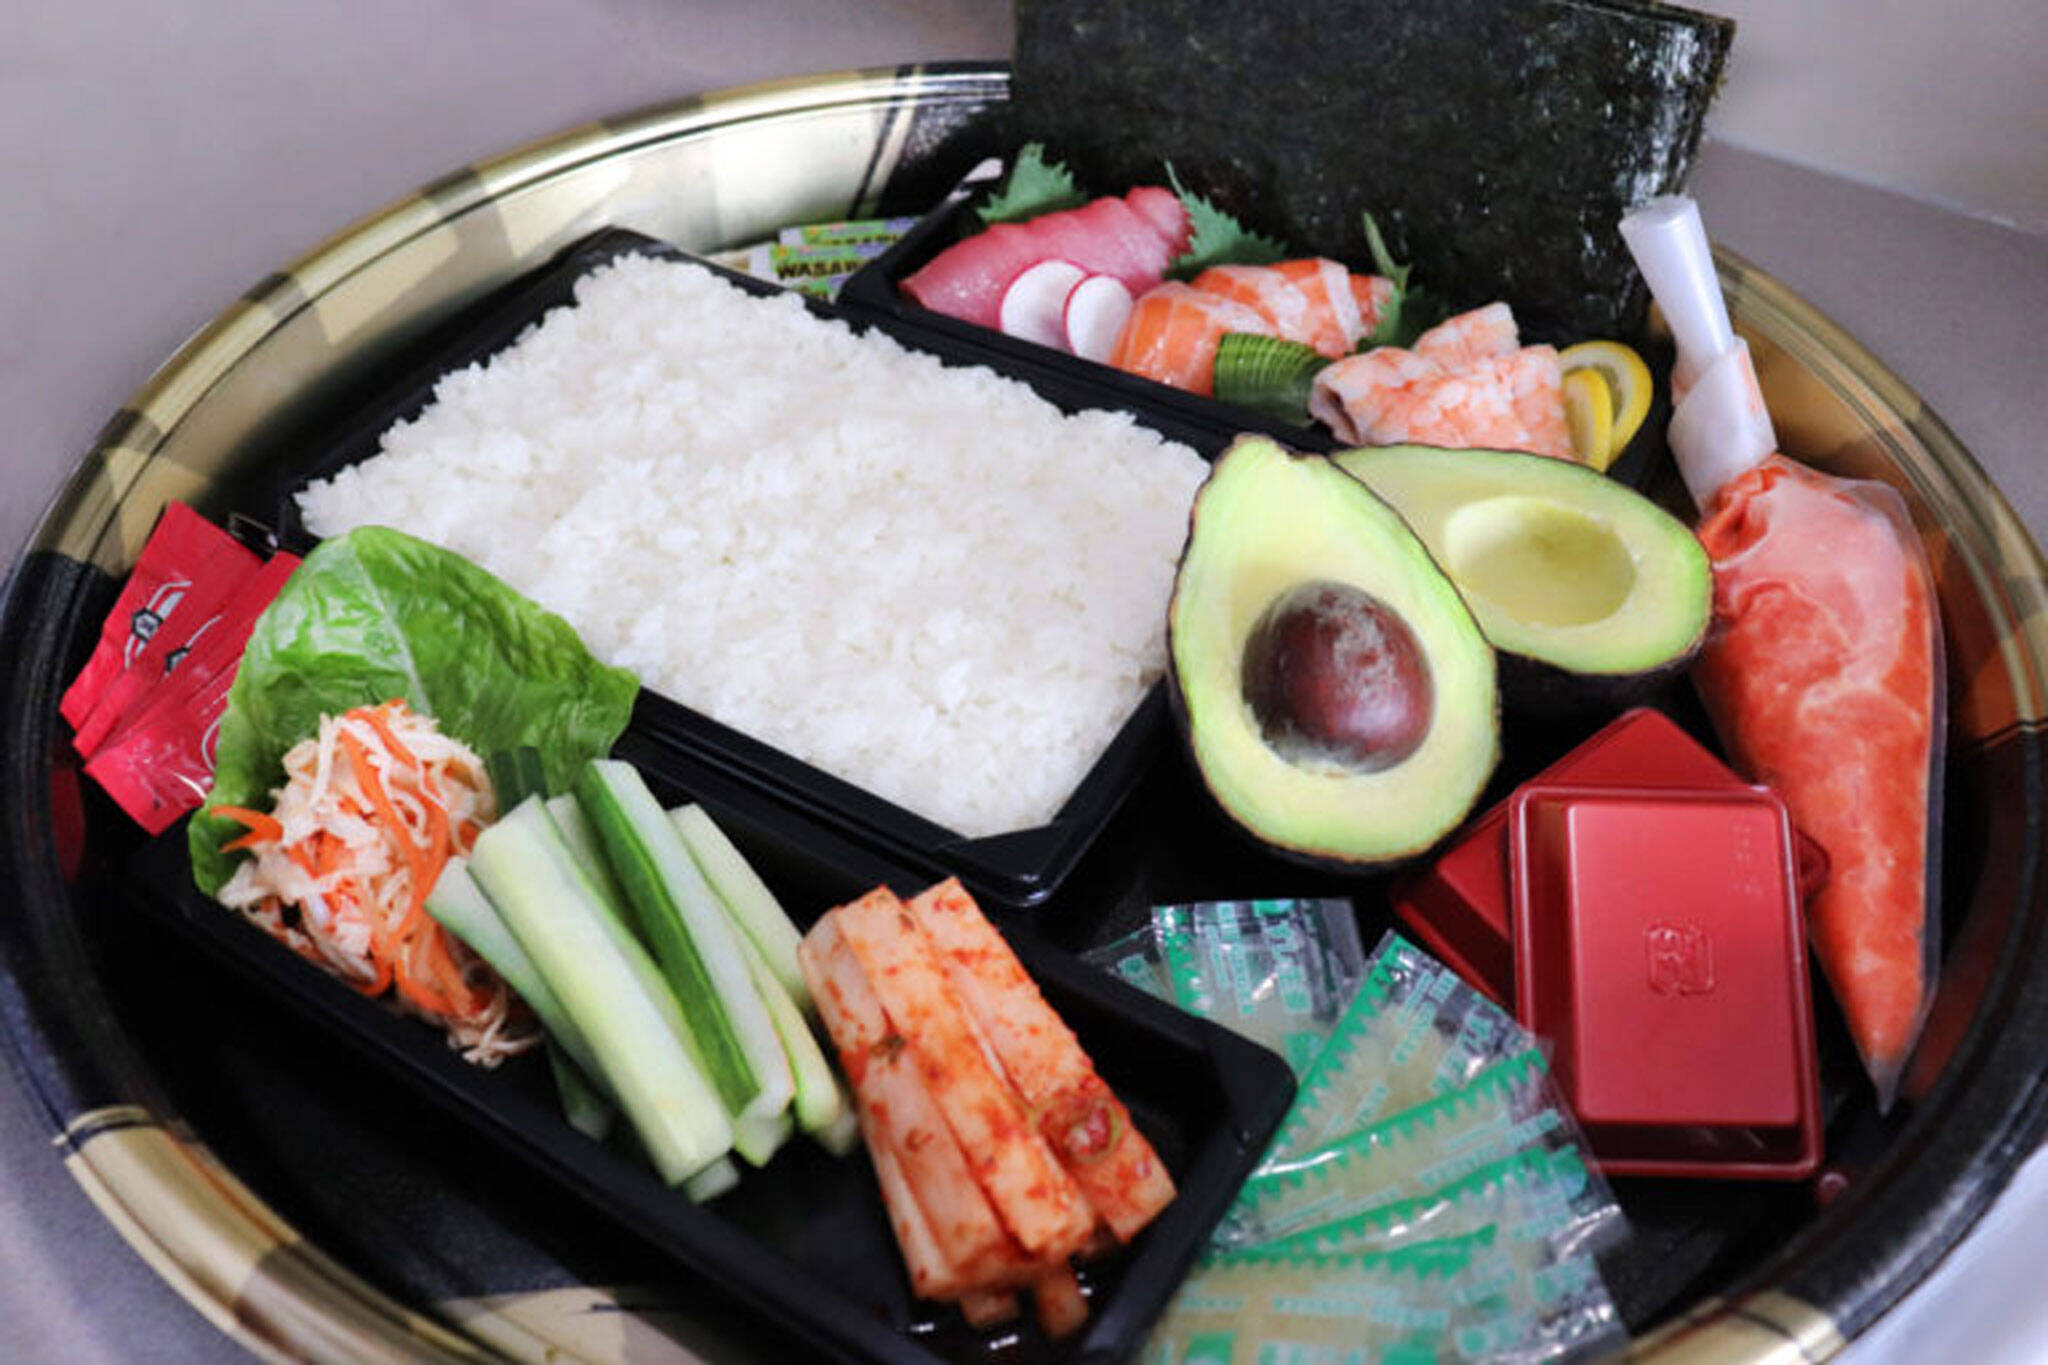 https://media.blogto.com/articles/miku-sushi-kit-toronto.jpg?w=2048&cmd=resize_then_crop&height=1365&quality=70